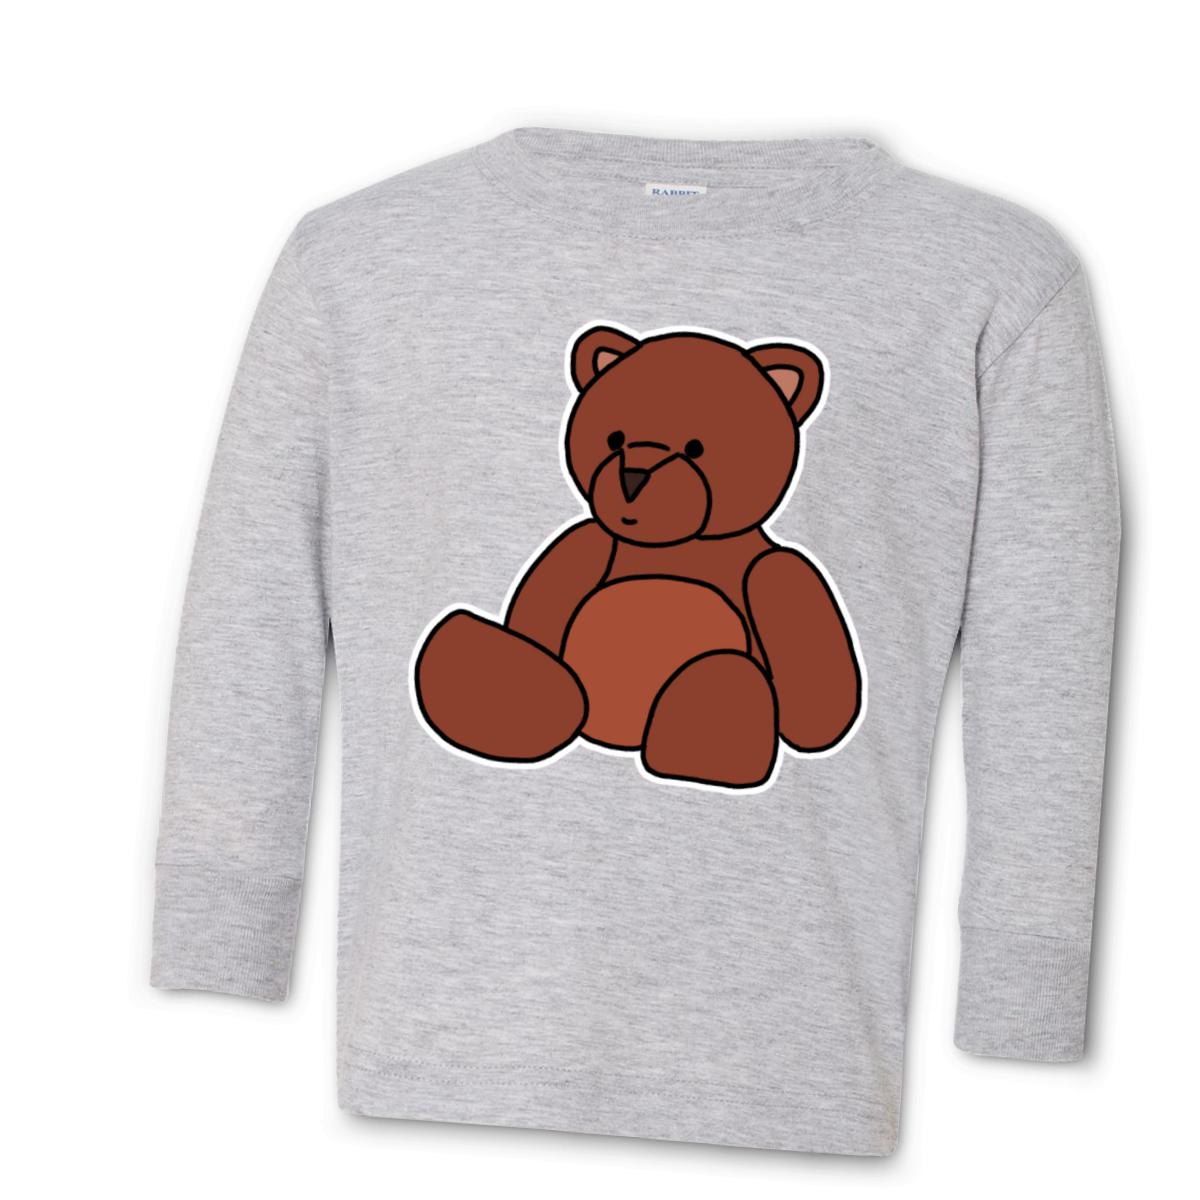 Toy Bear Toddler Long Sleeve Tee 2T heather